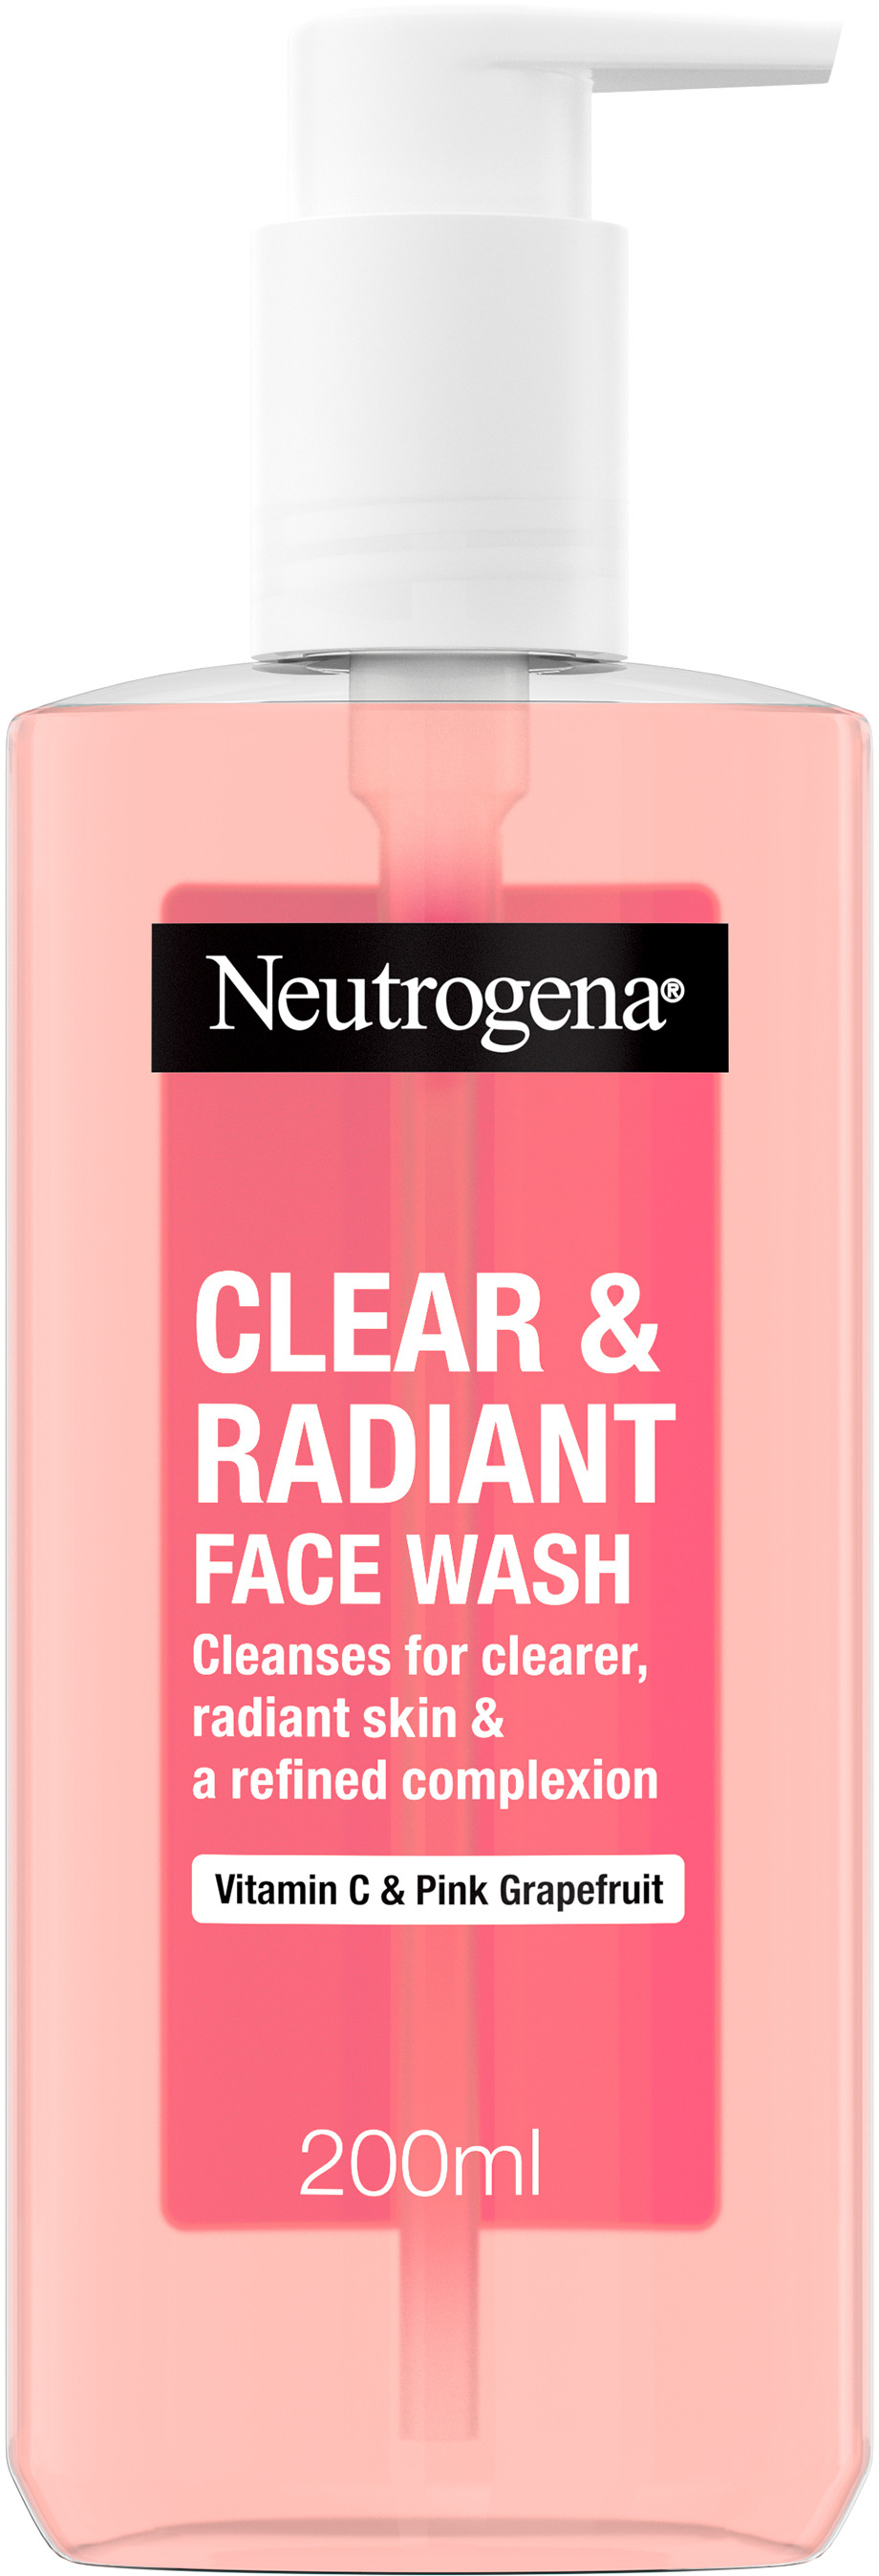 Neutrogena Visibly Clear Pink Grapefruit Facial Wash